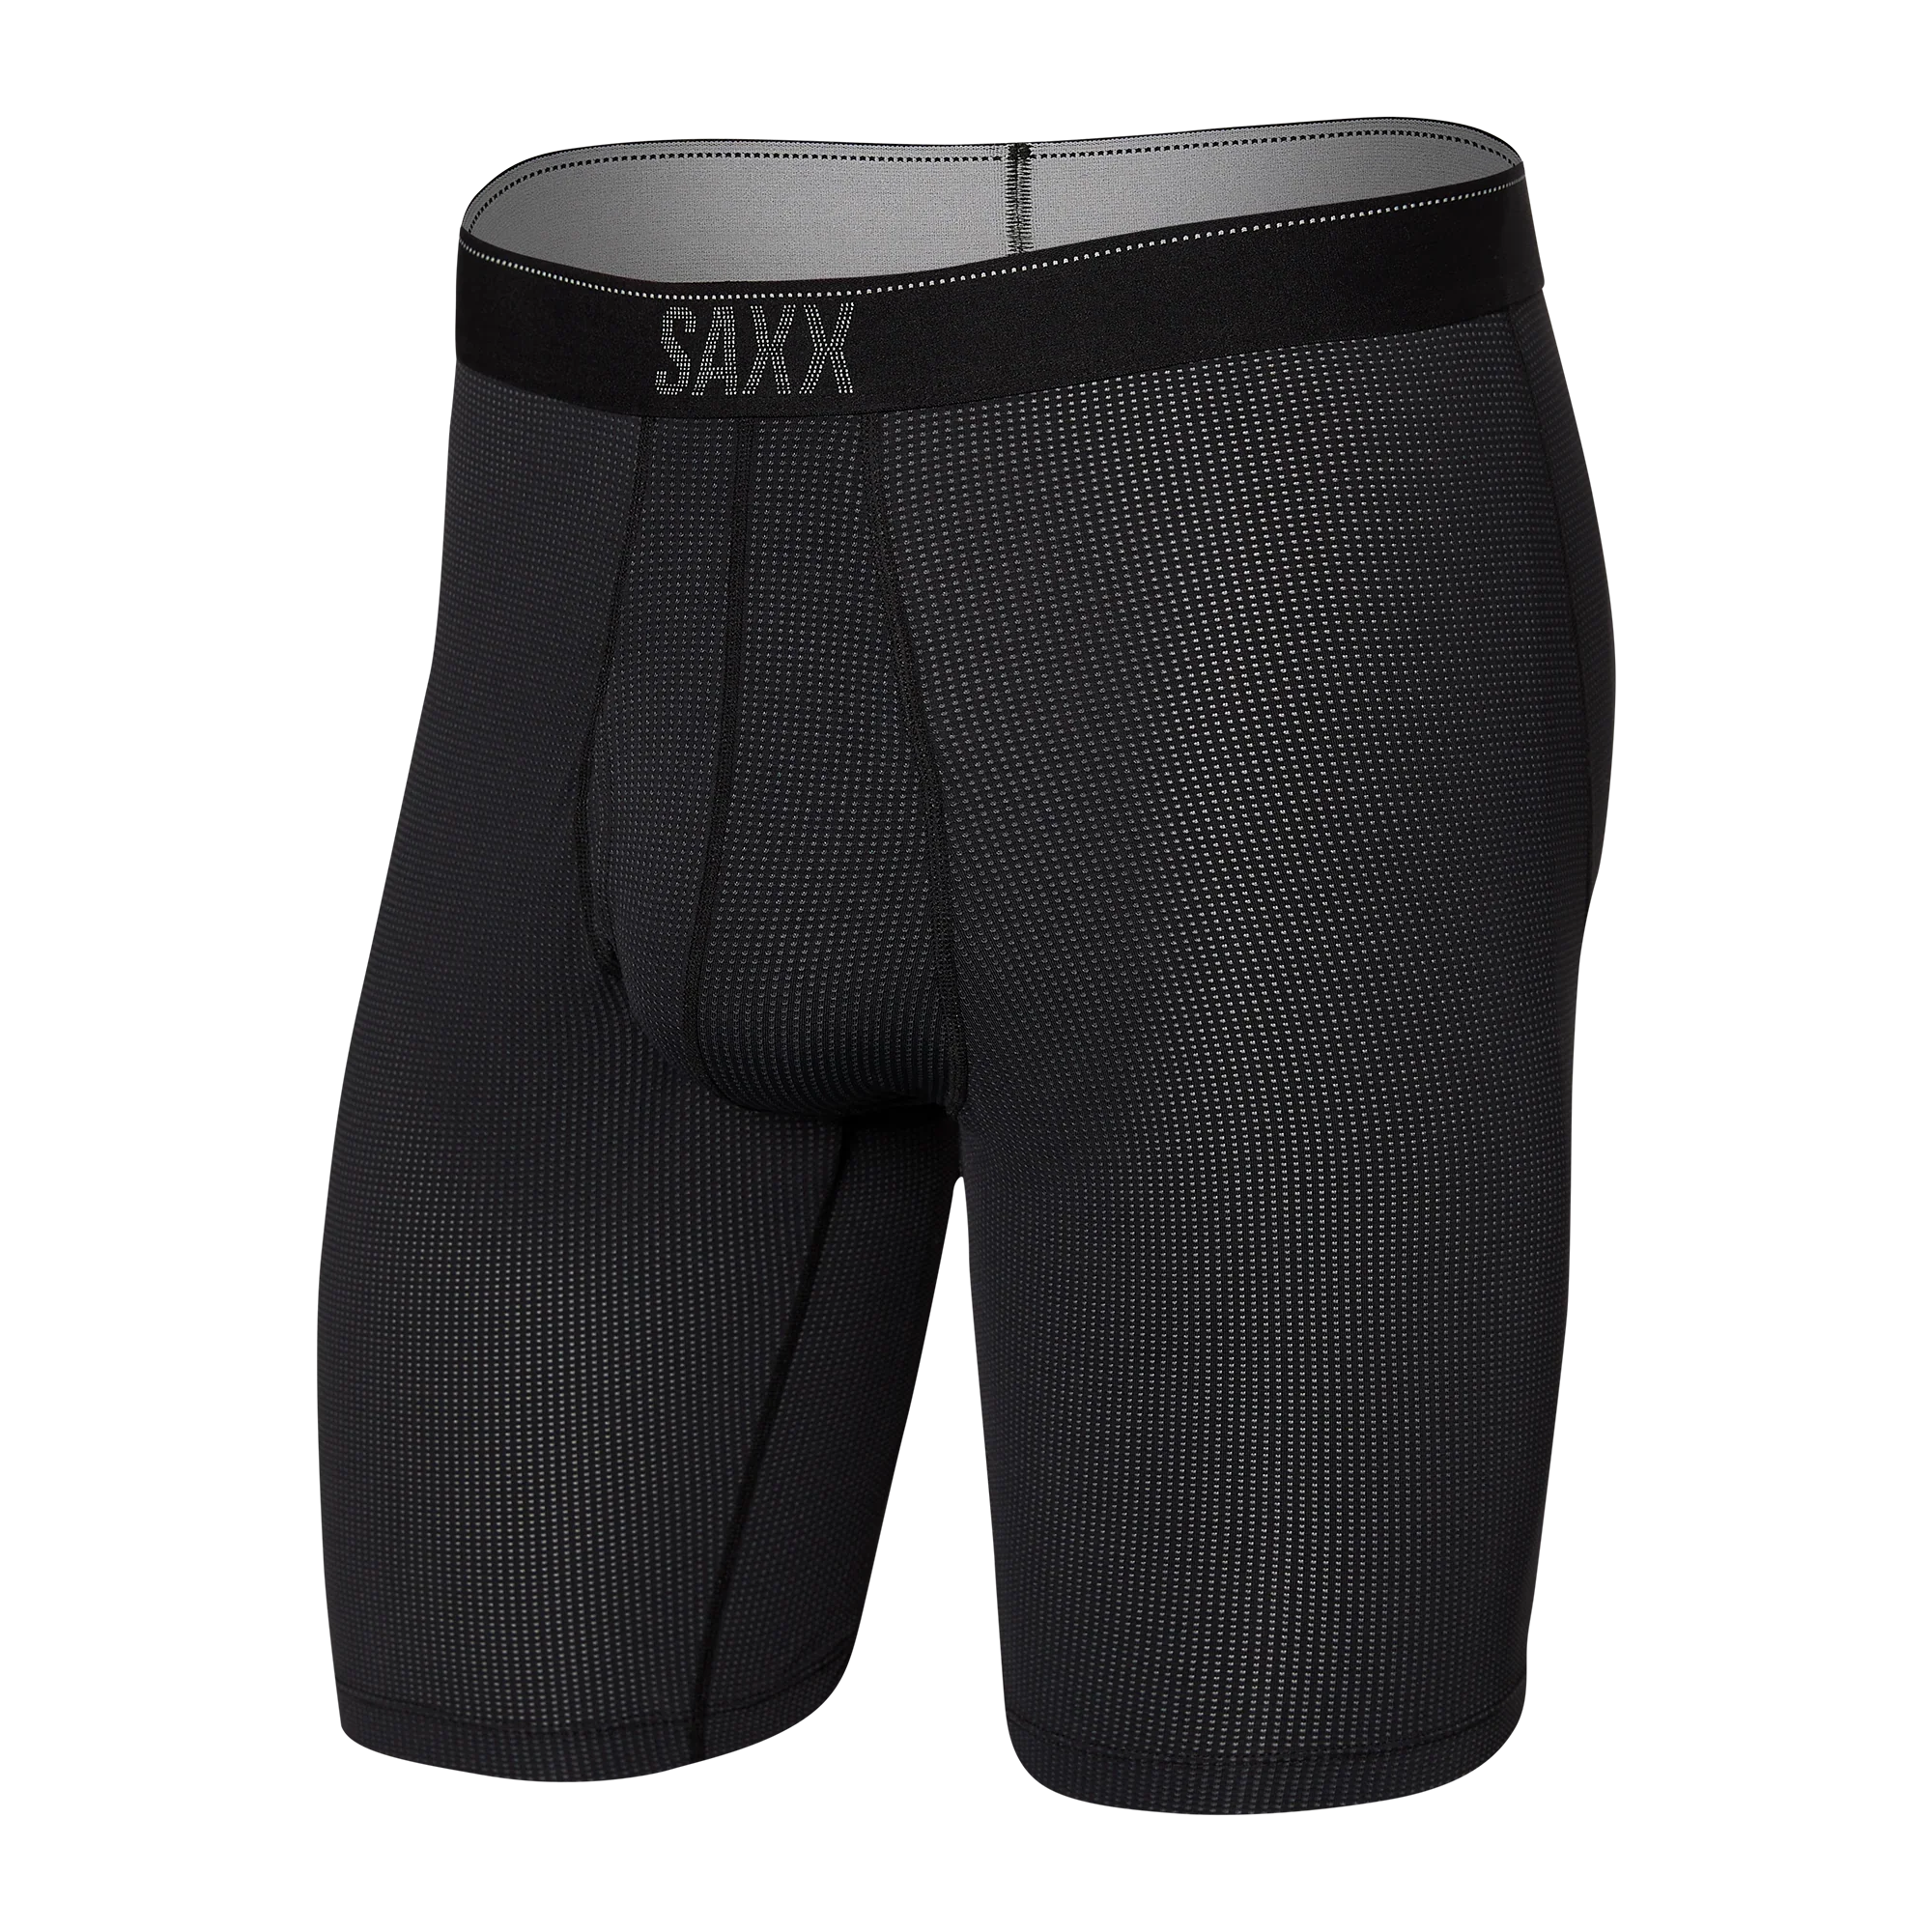 'SAXX Quest Quick Dry Mesh Long Leg - Black II' in 'Black' colour